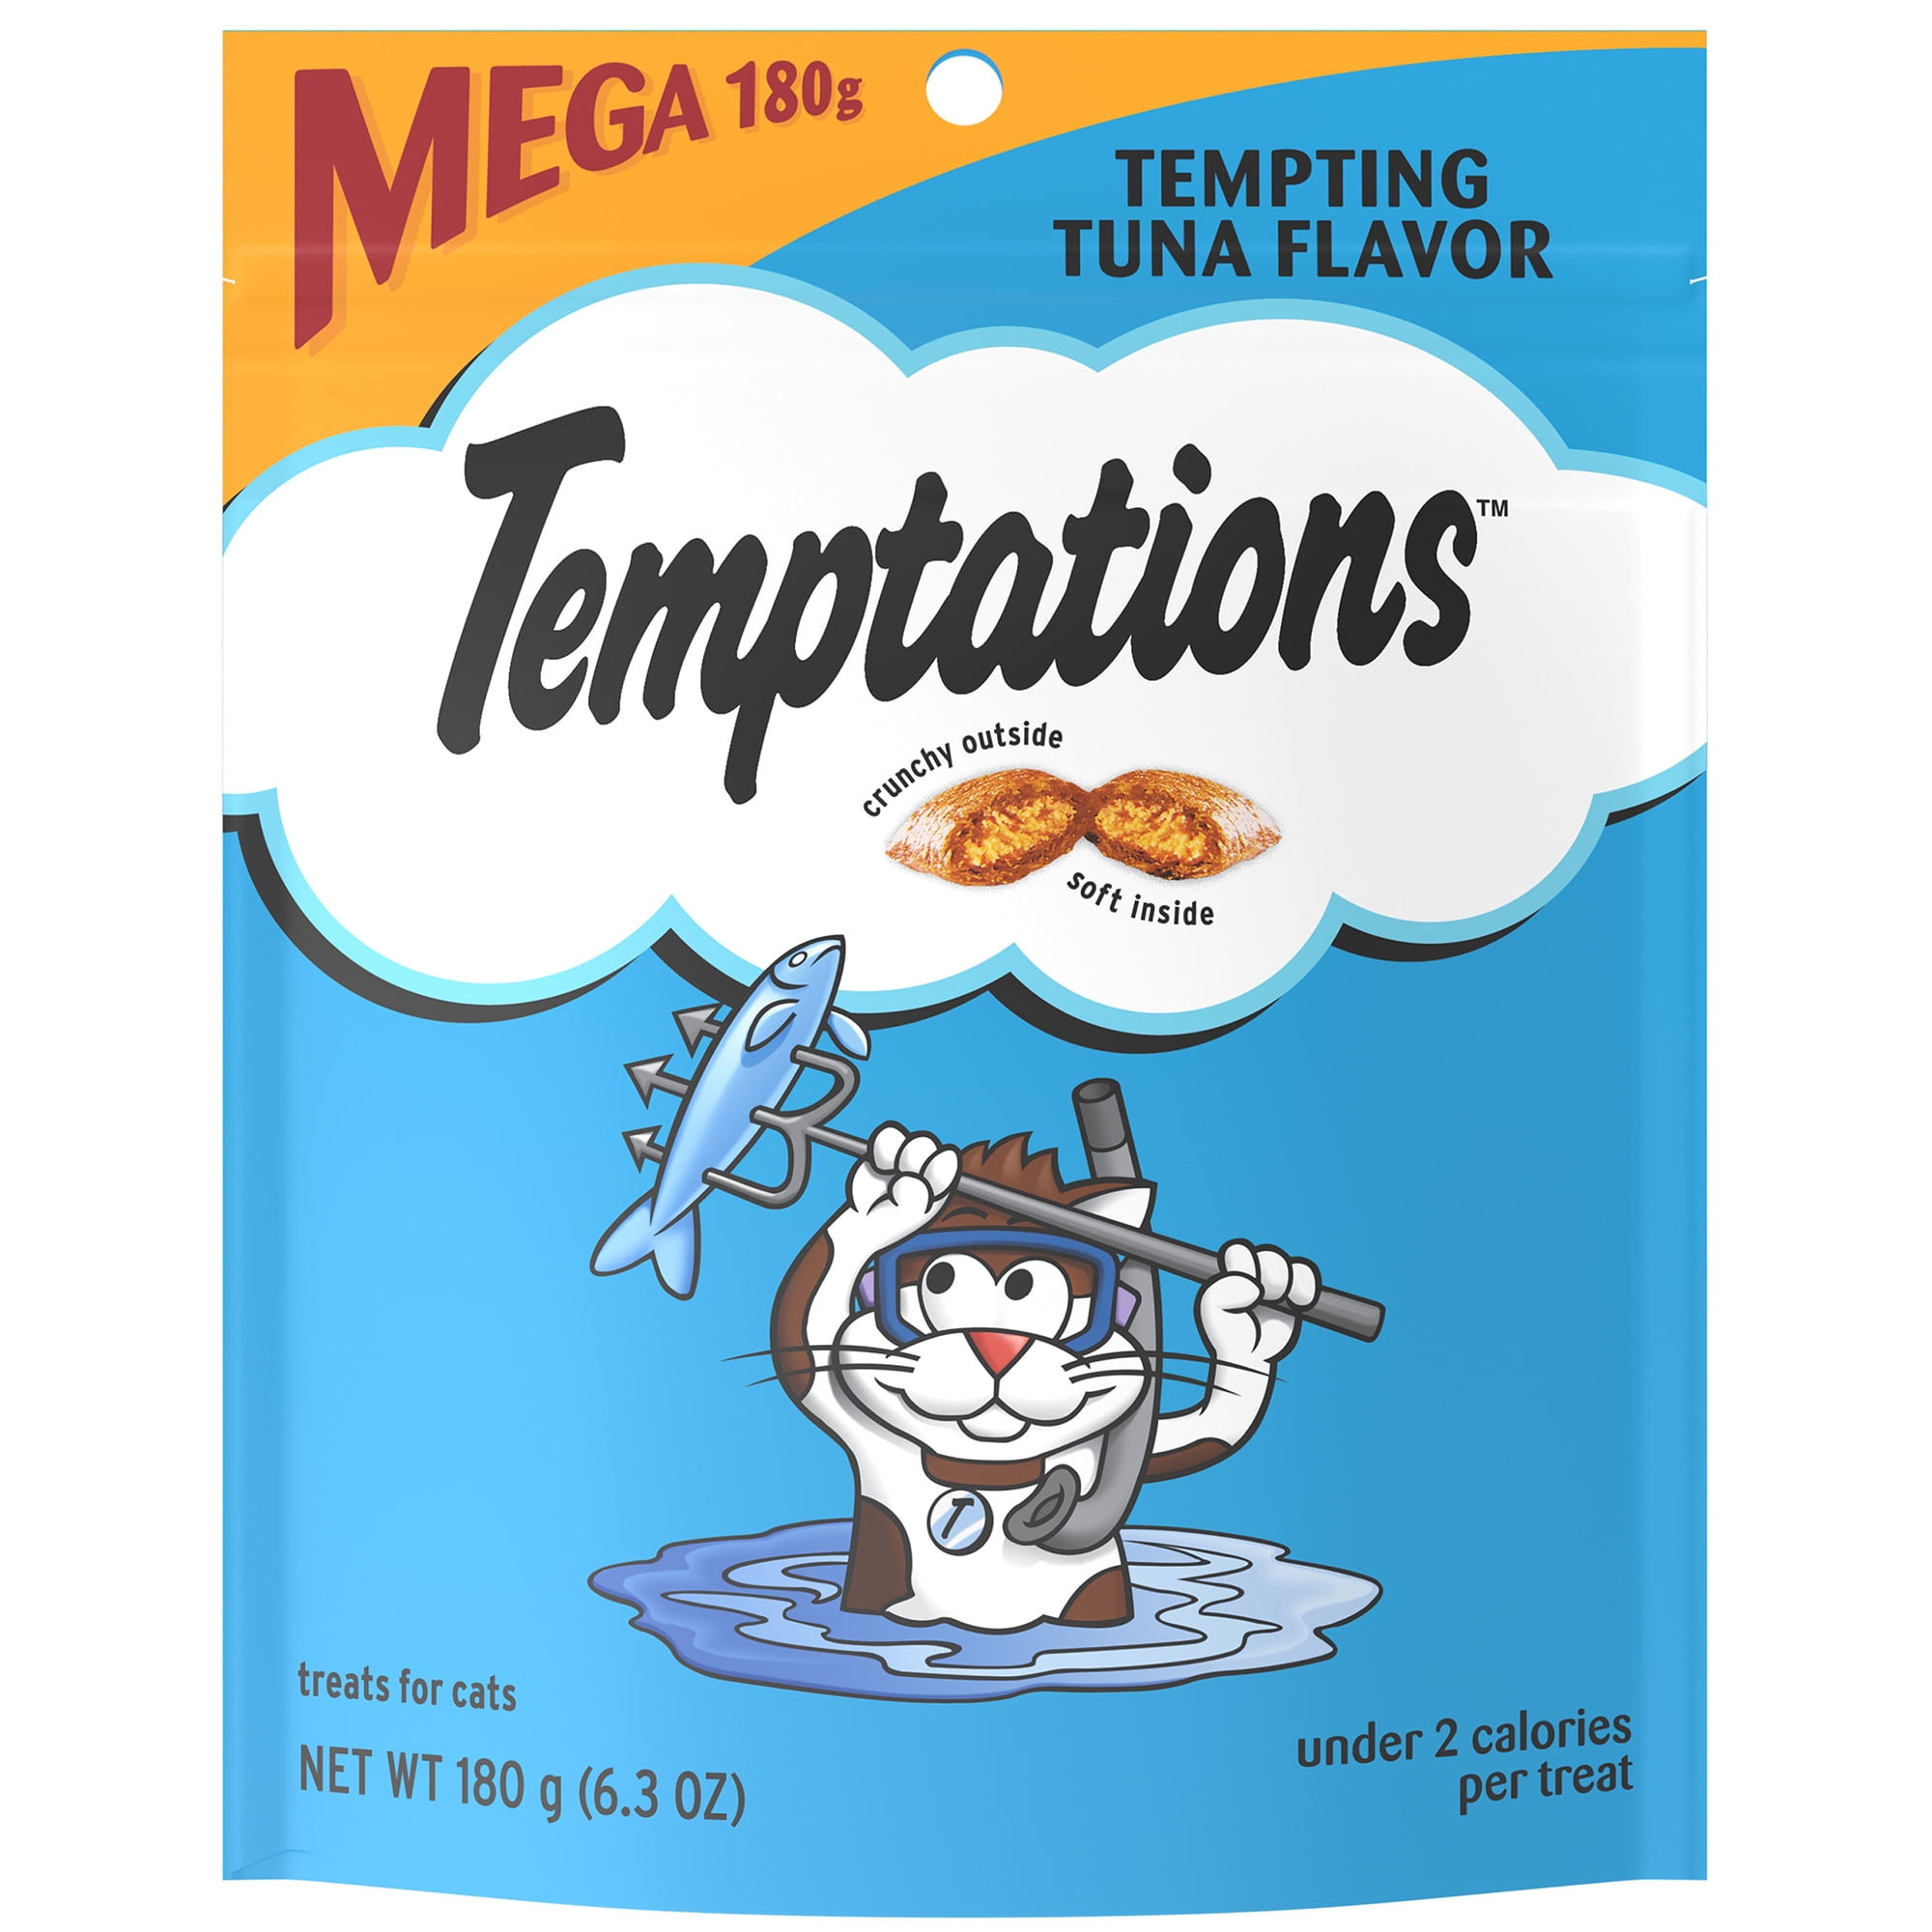 TEMPTATIONS Classic Crunchy and Soft Cat Treats Tempting Tuna Flavor, 6.3 oz. Pouch